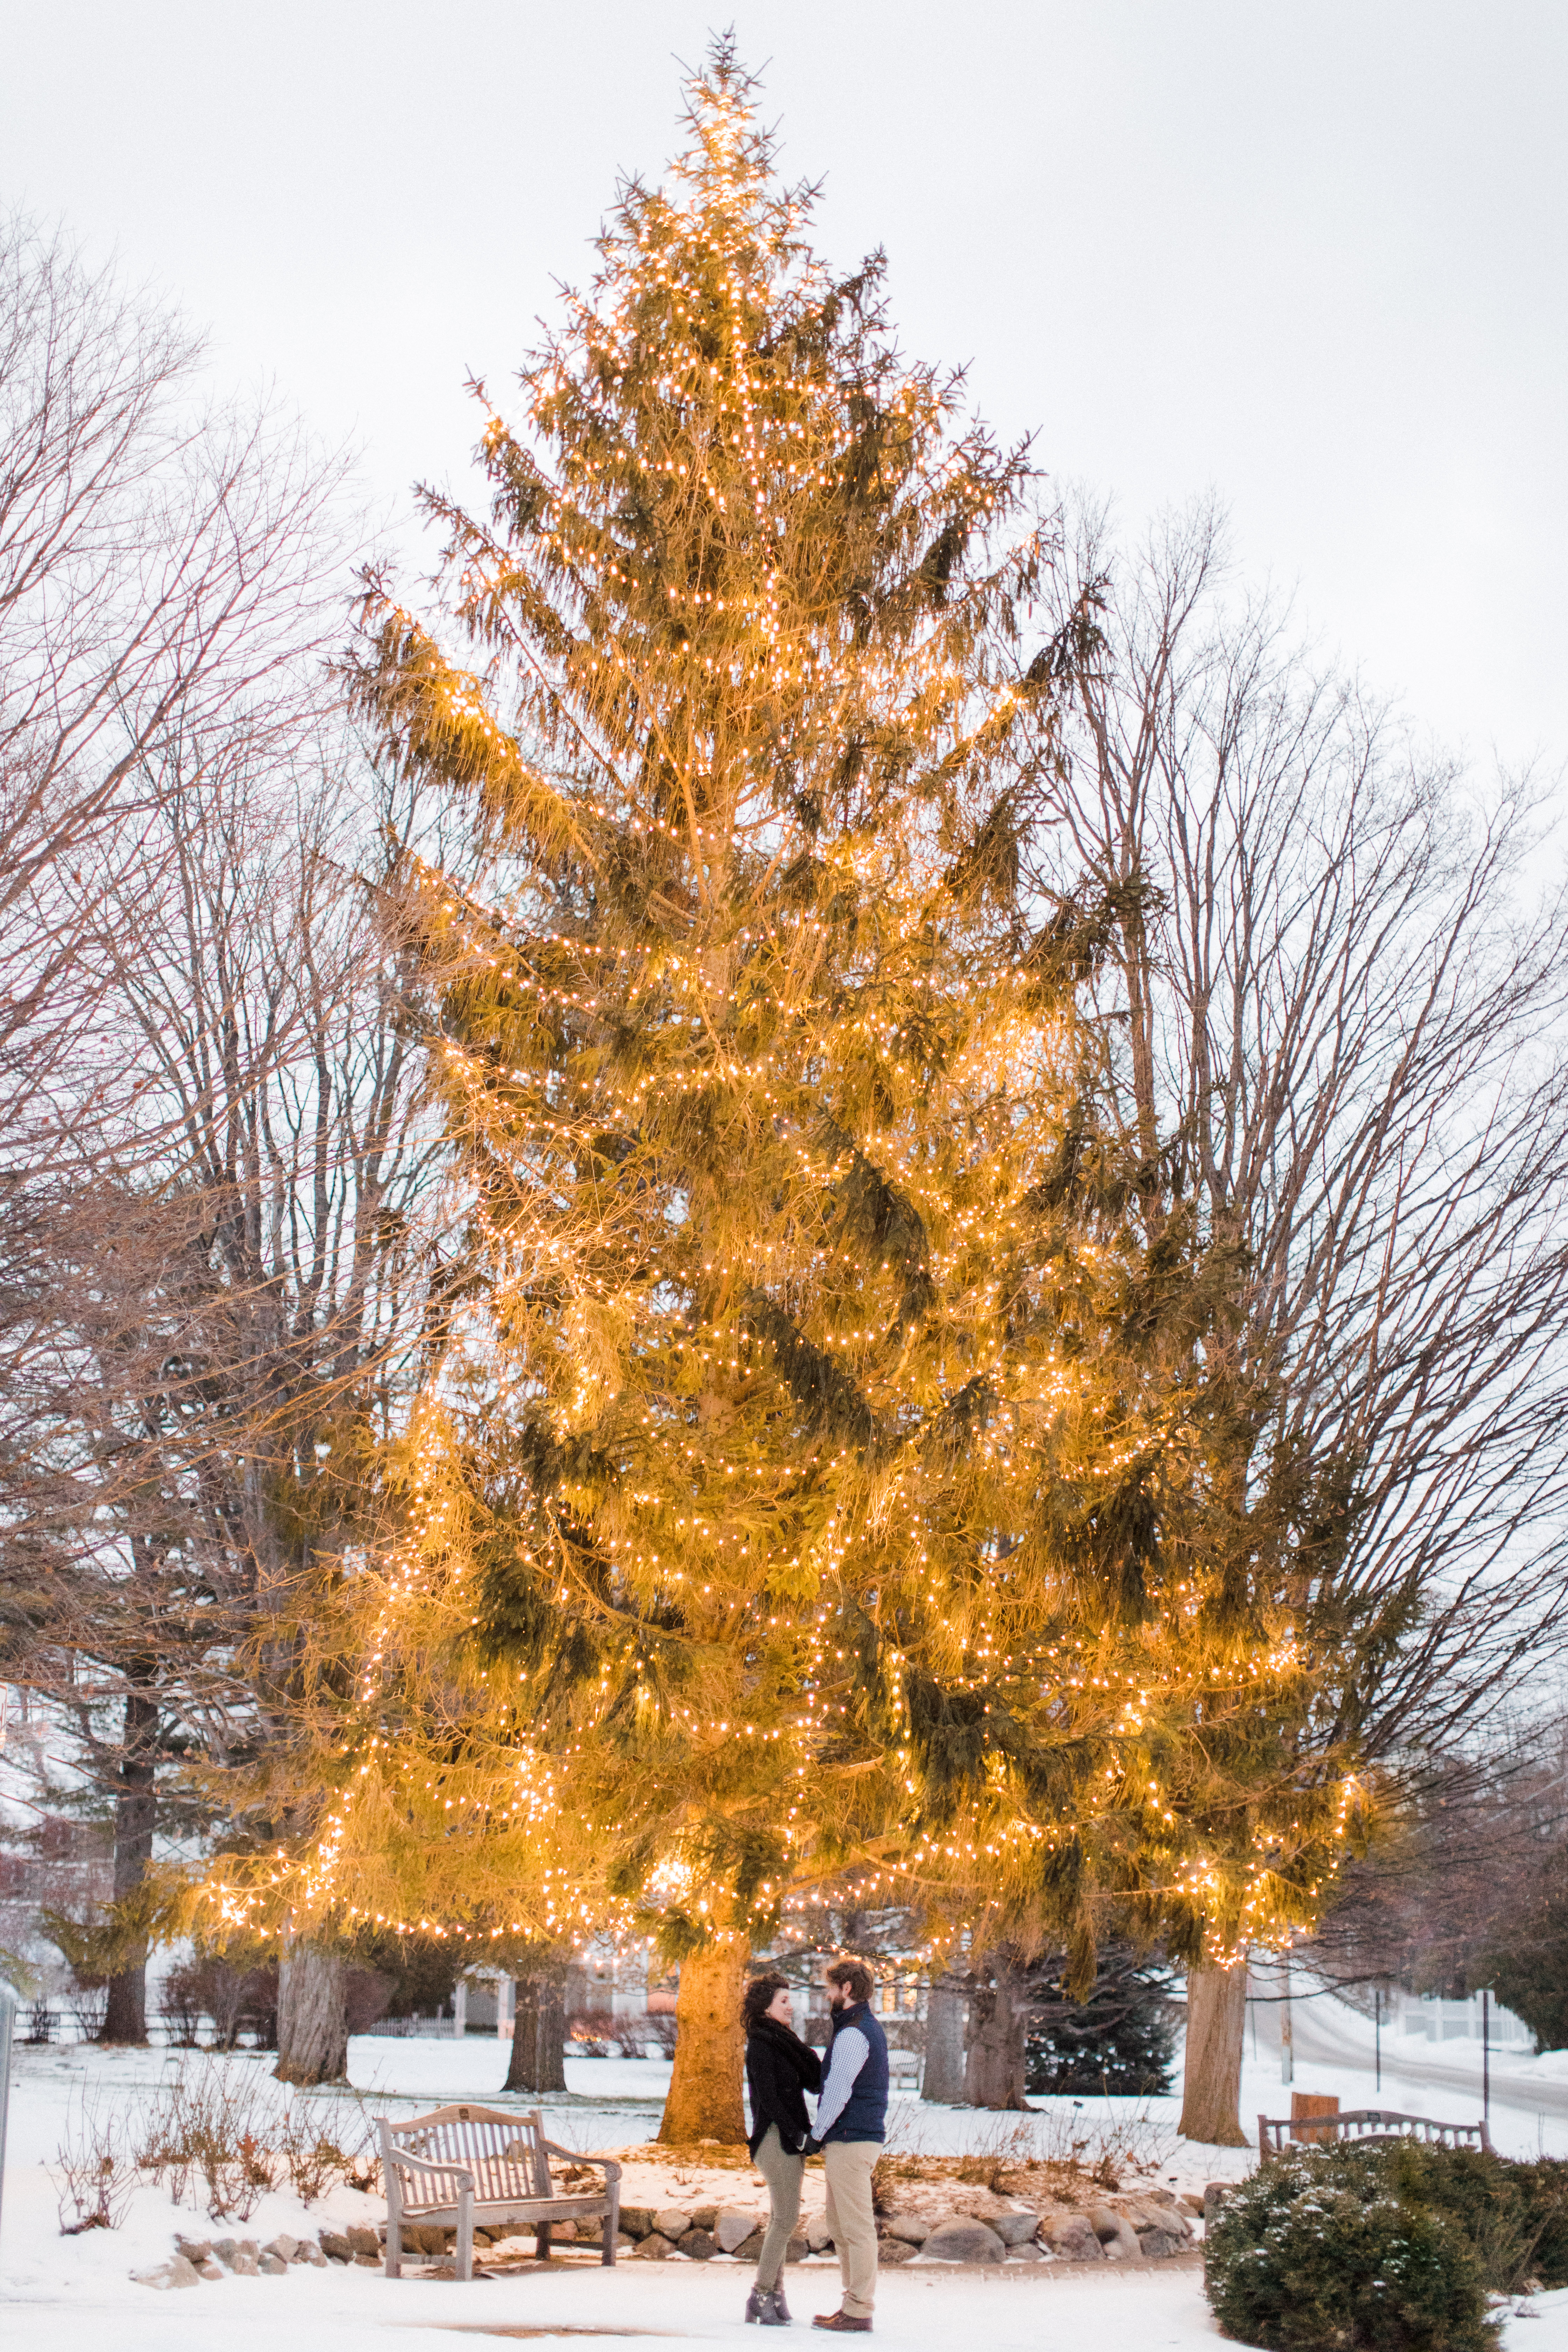 Winter Engagment Photos | Christmas Proposal | Cory Weber Photography